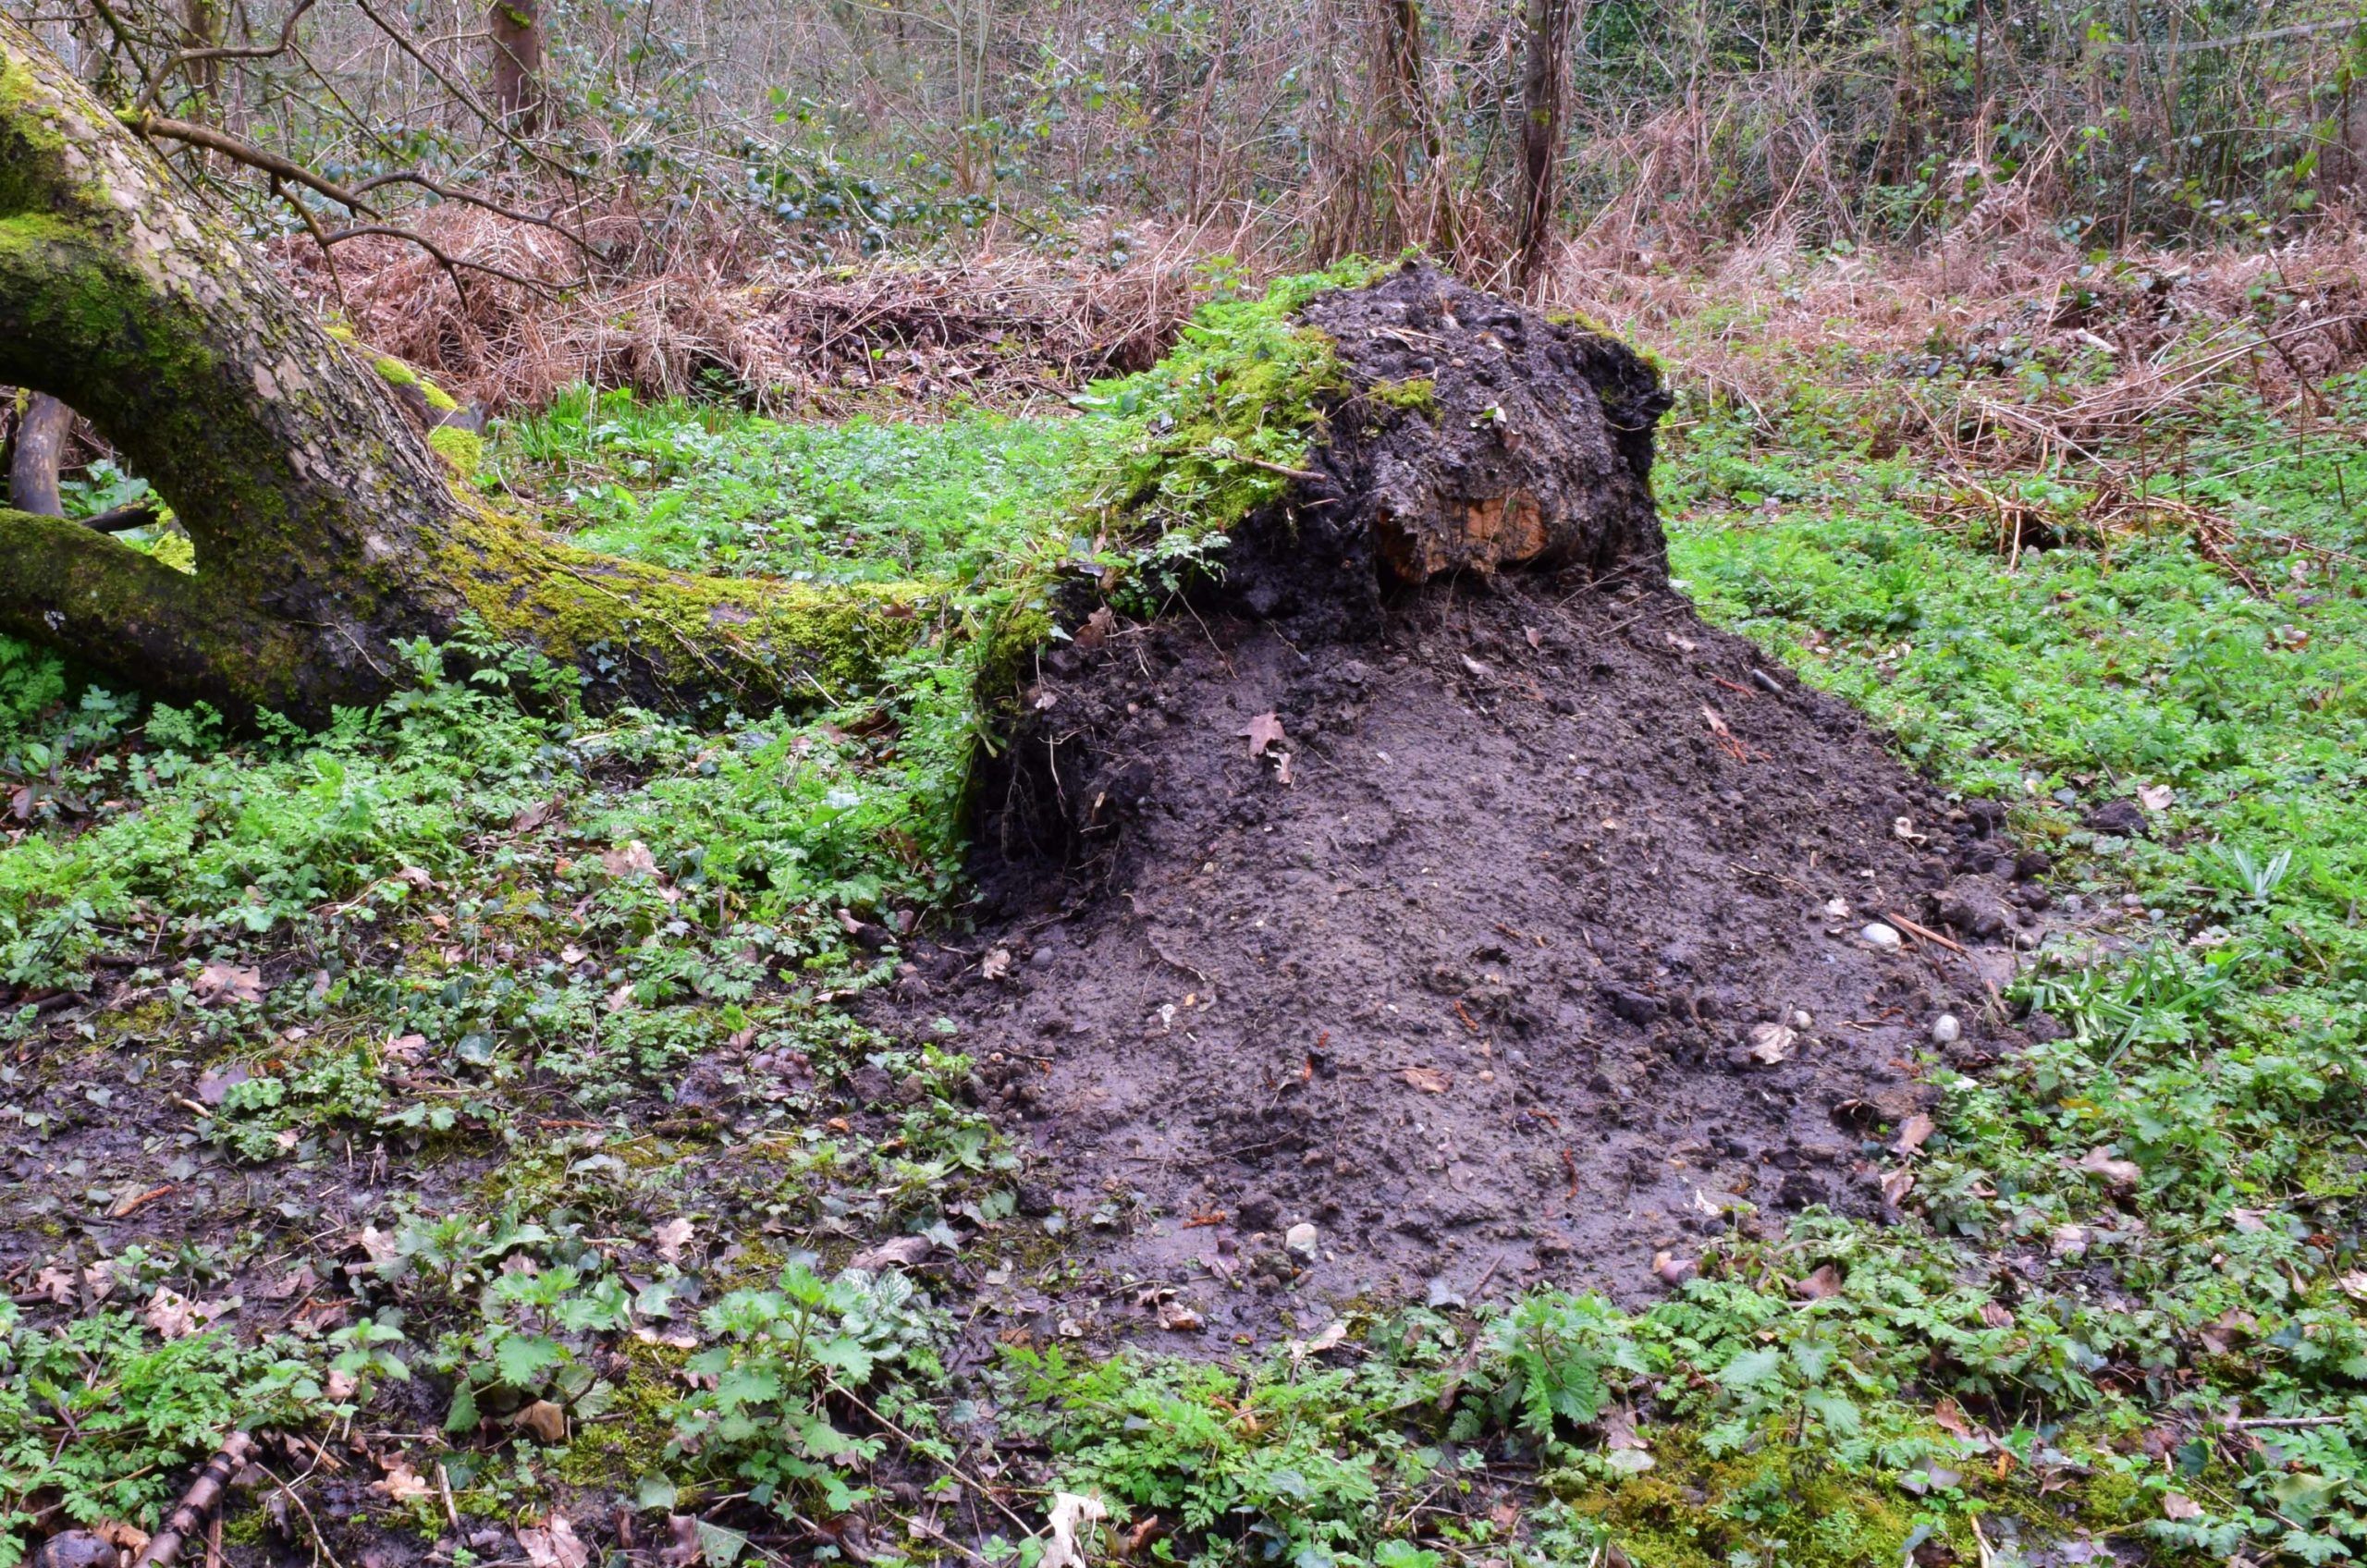 Soil around fallen tree roots - credit Christopher Stanworth